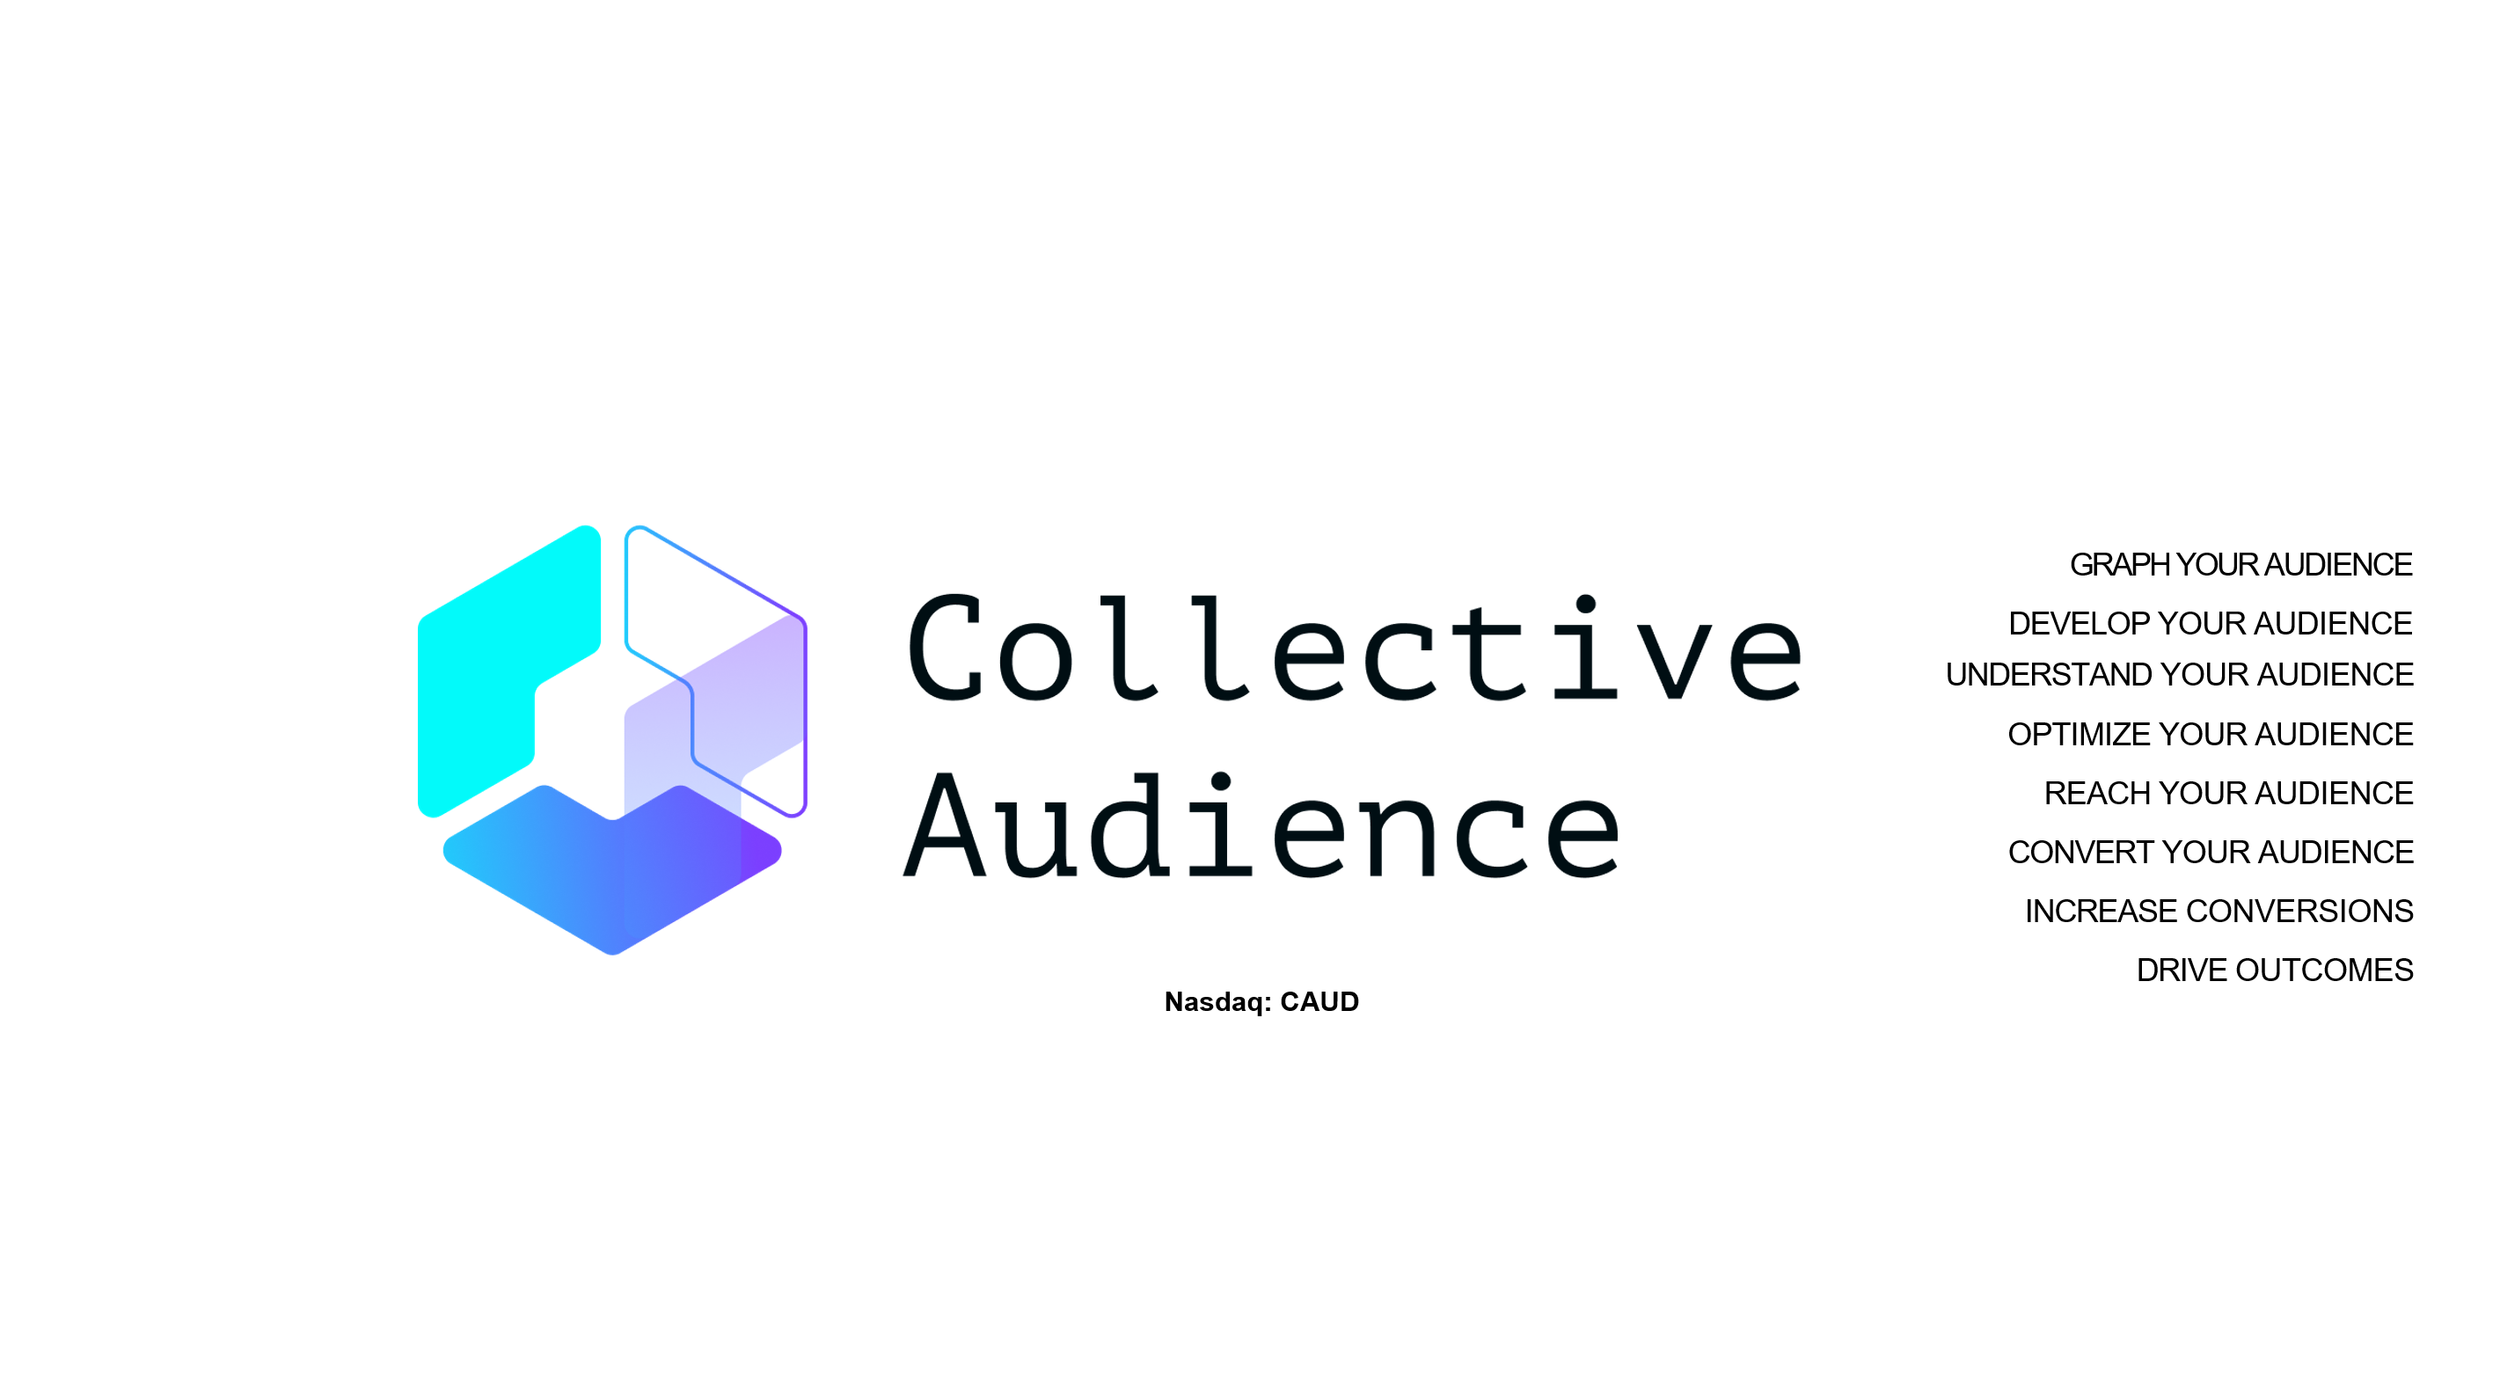 Collective Audience (Nasdaq: CAUD)